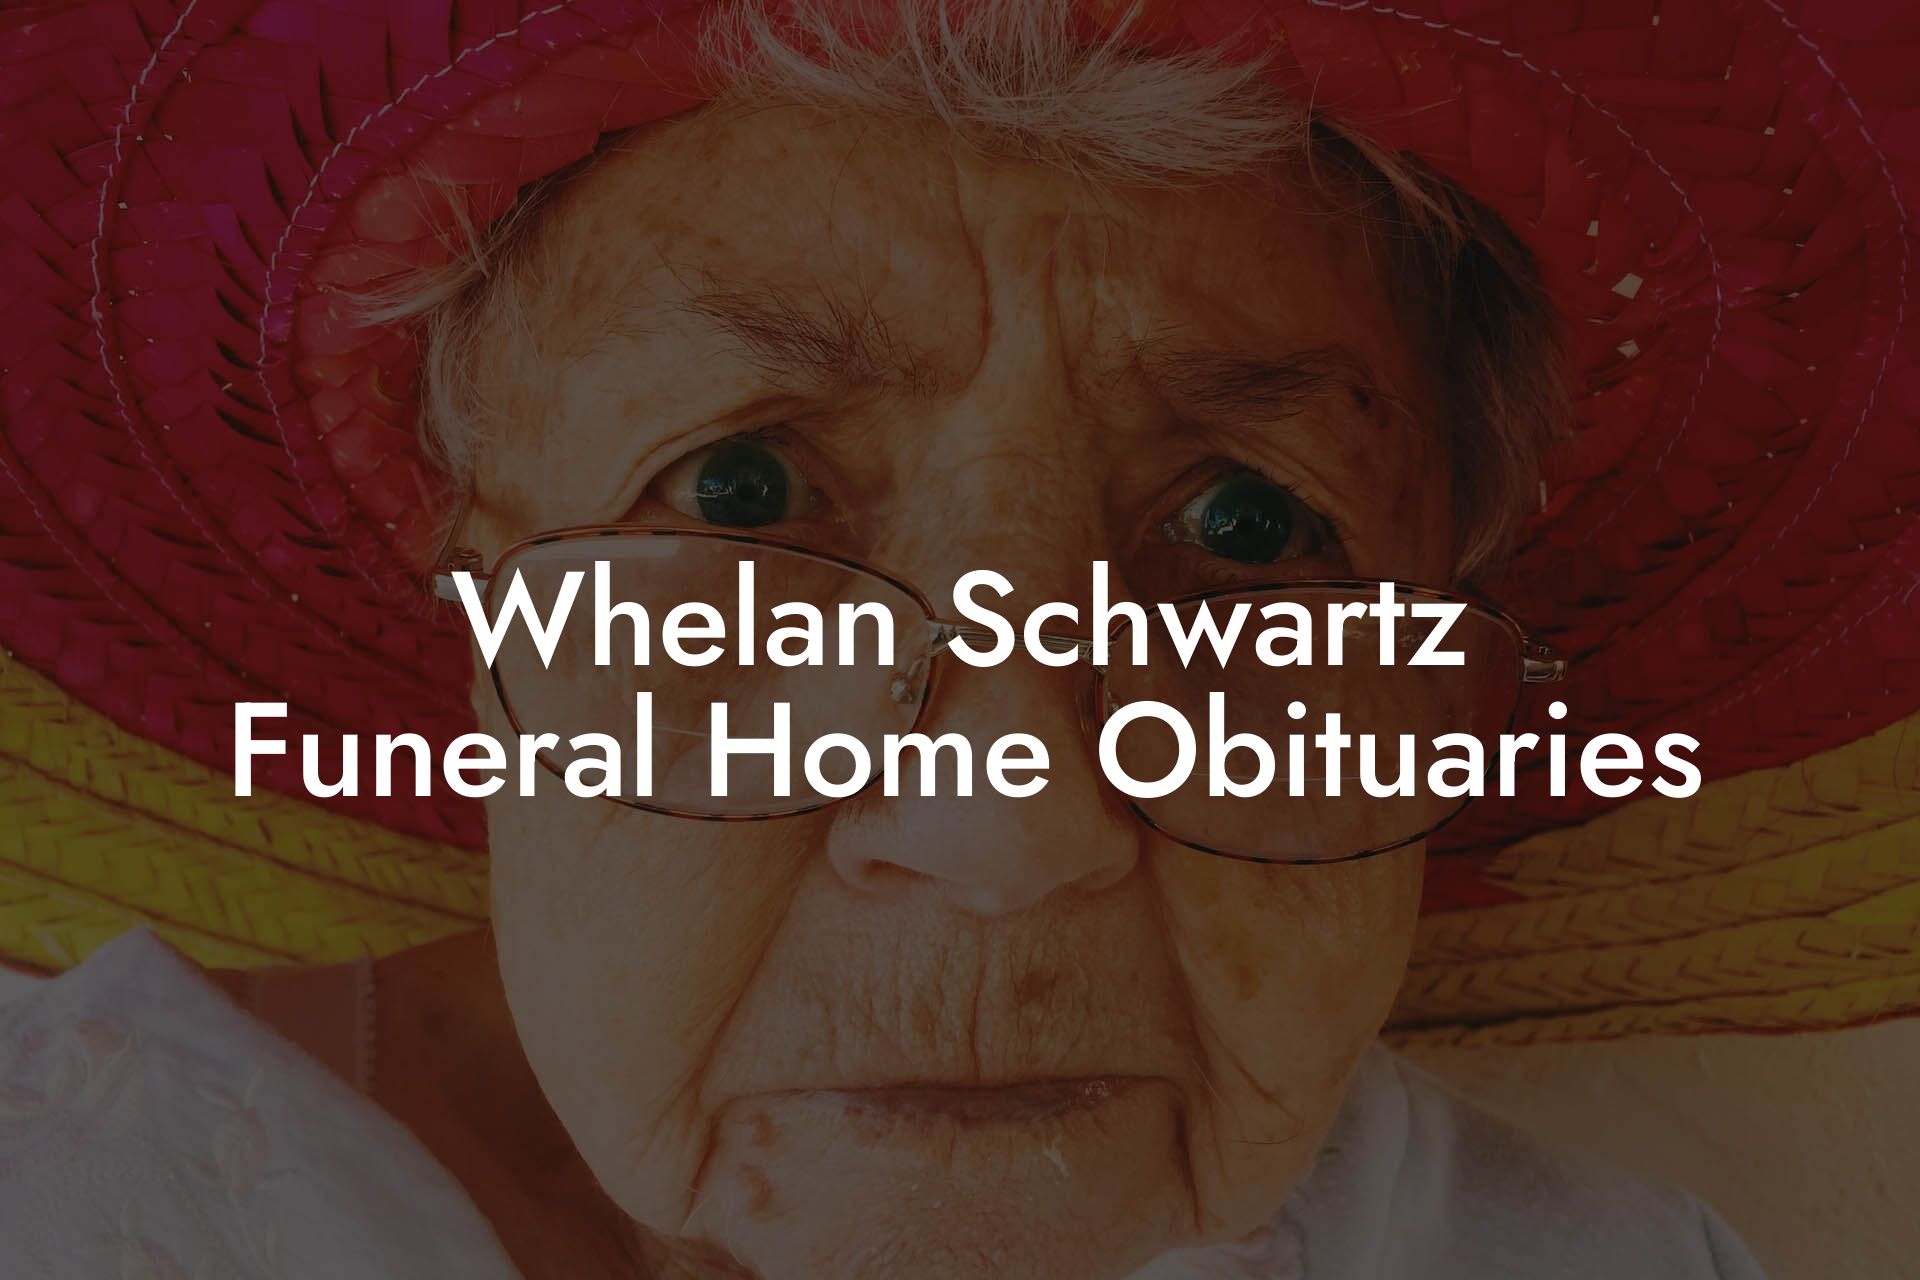 Whelan Schwartz Funeral Home Obituaries